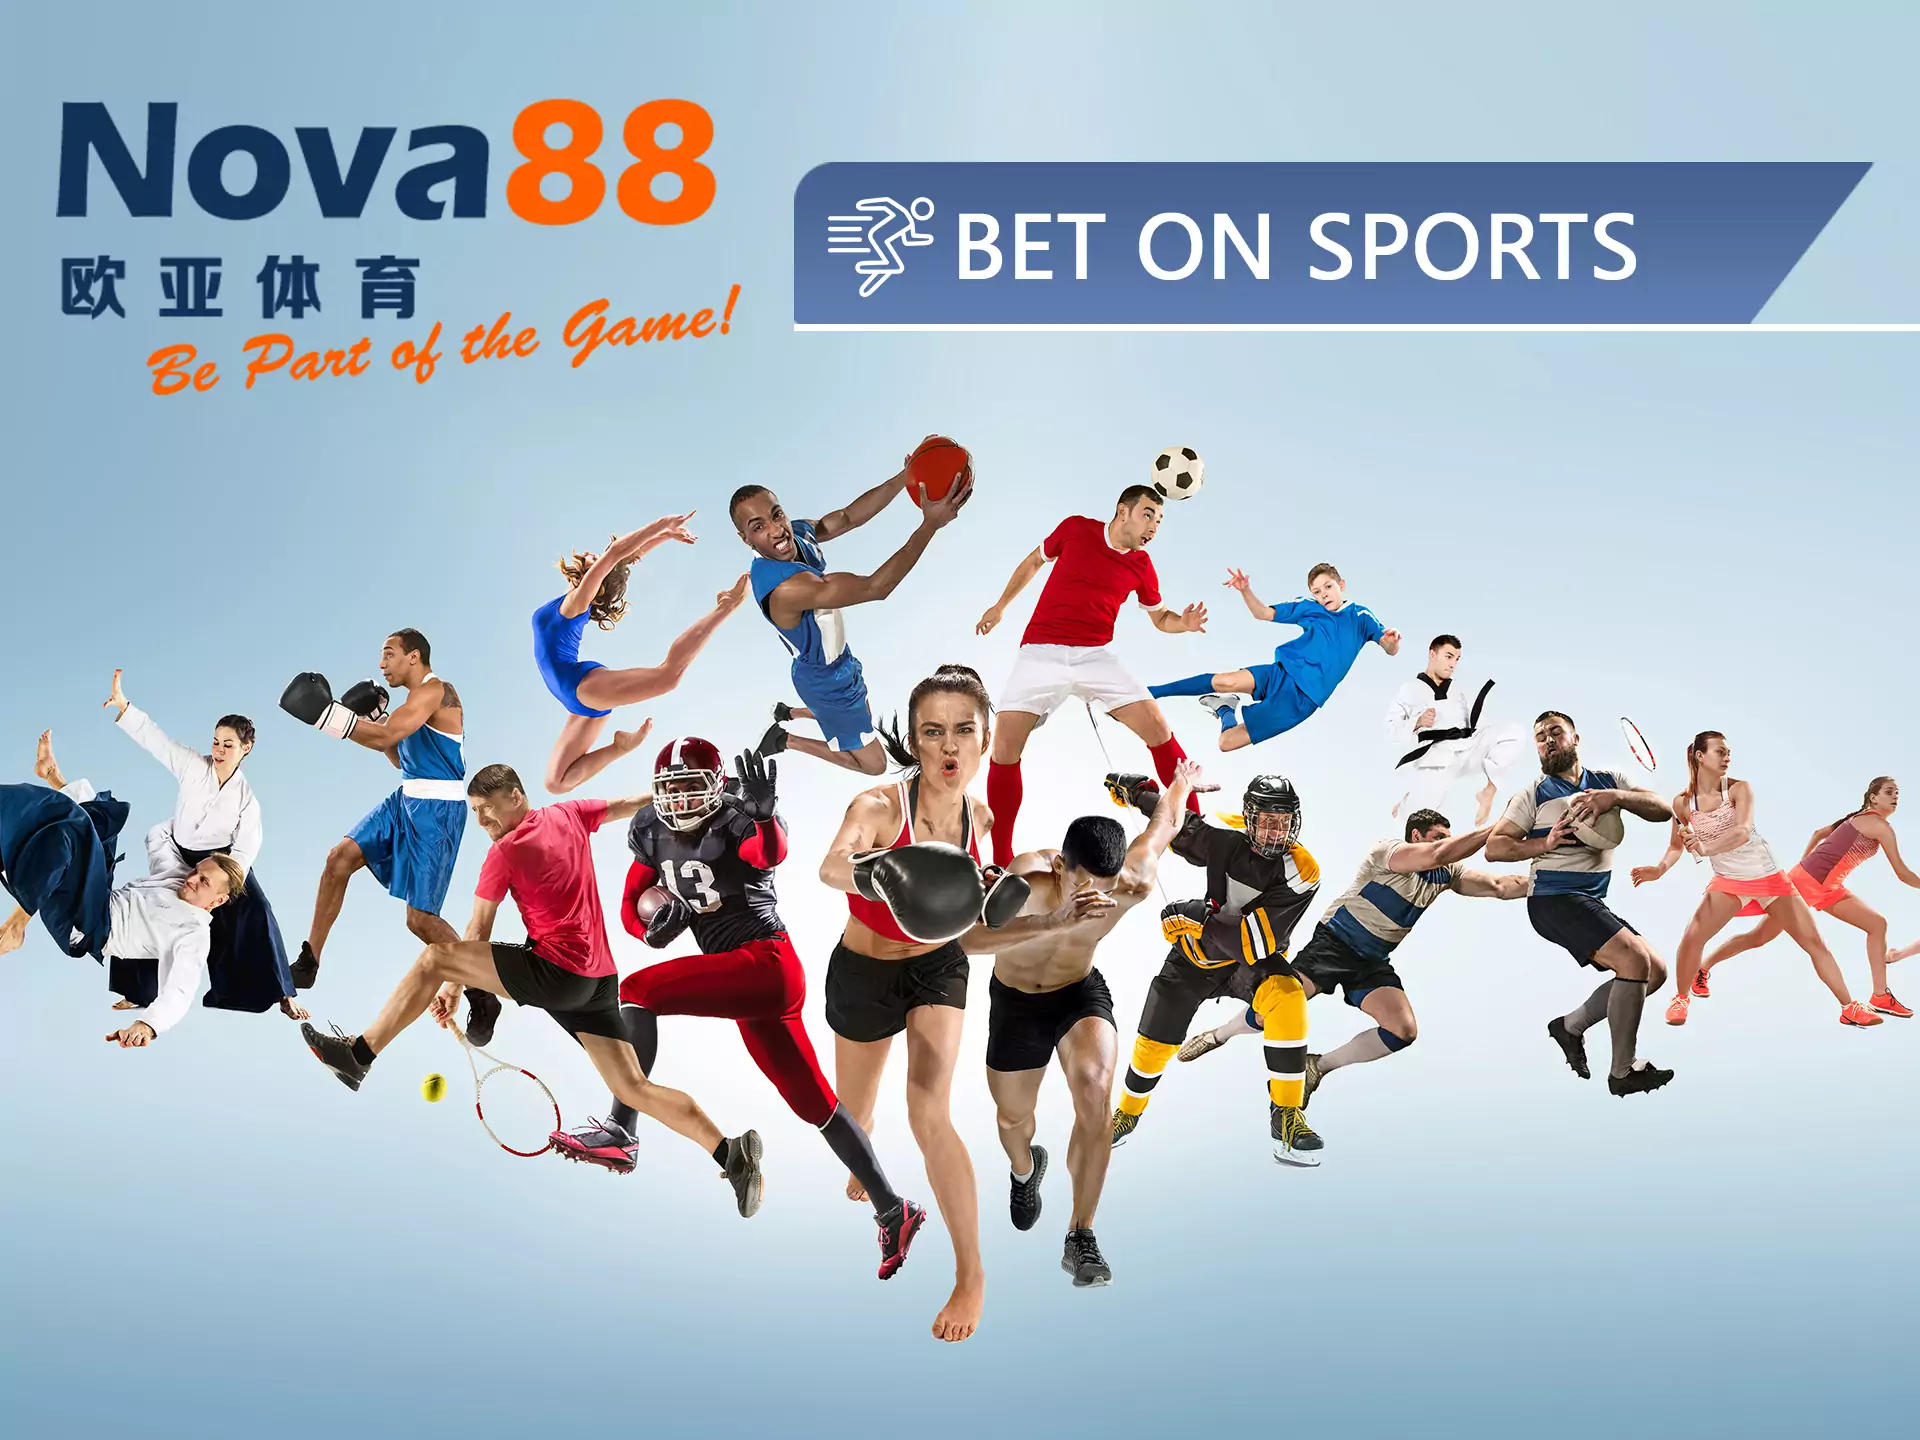 Bet on different sports in Nova88 app.